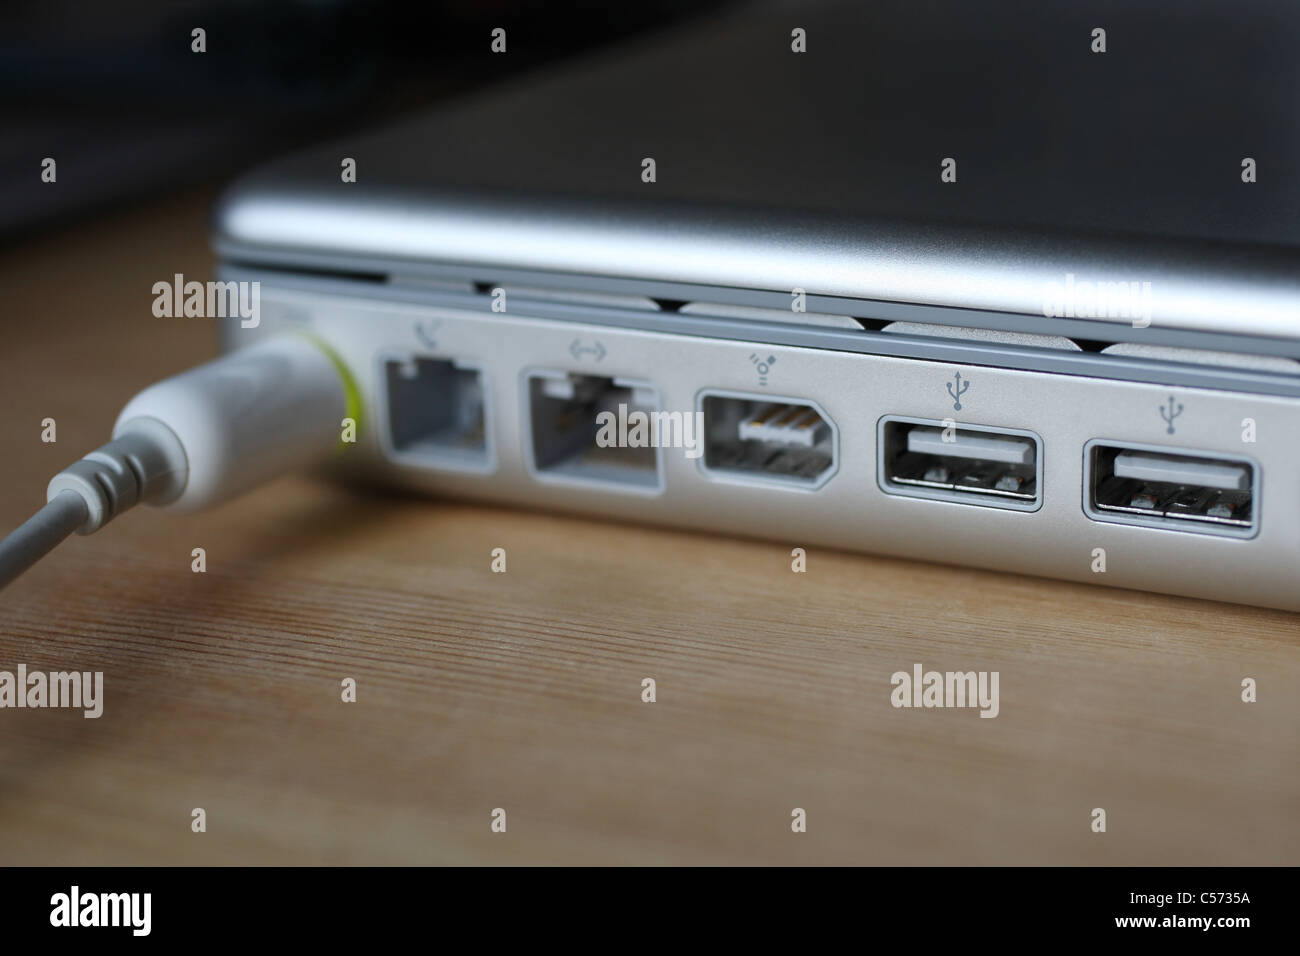 Apple PowerBook G4 Laptop USB 2.0 Ports, power adapter port. Stock Photo